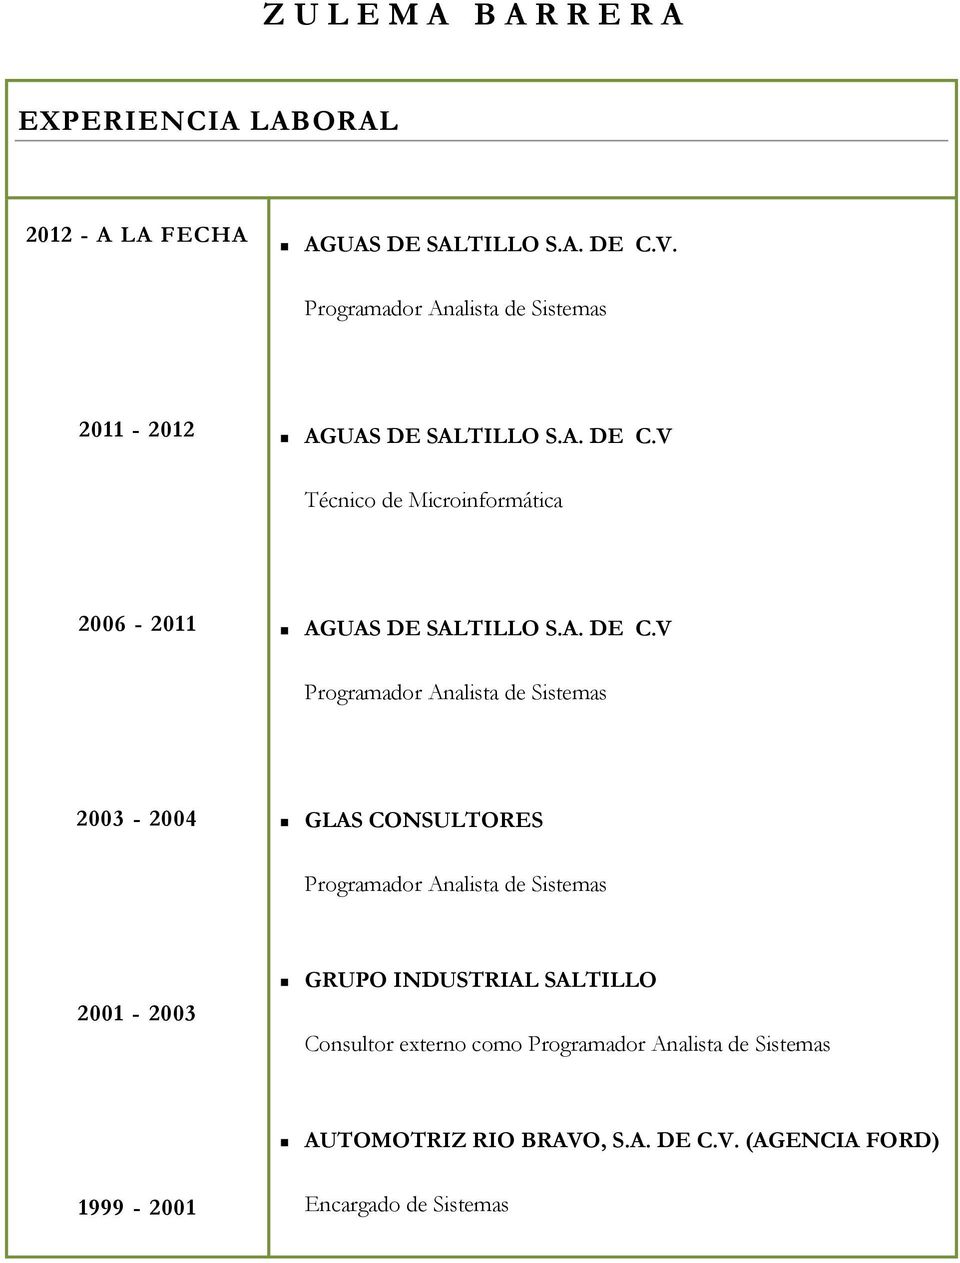 Programador Analista de Sistemas 2001-2003 GRUPO INDUSTRIAL SALTILLO Consultor externo como